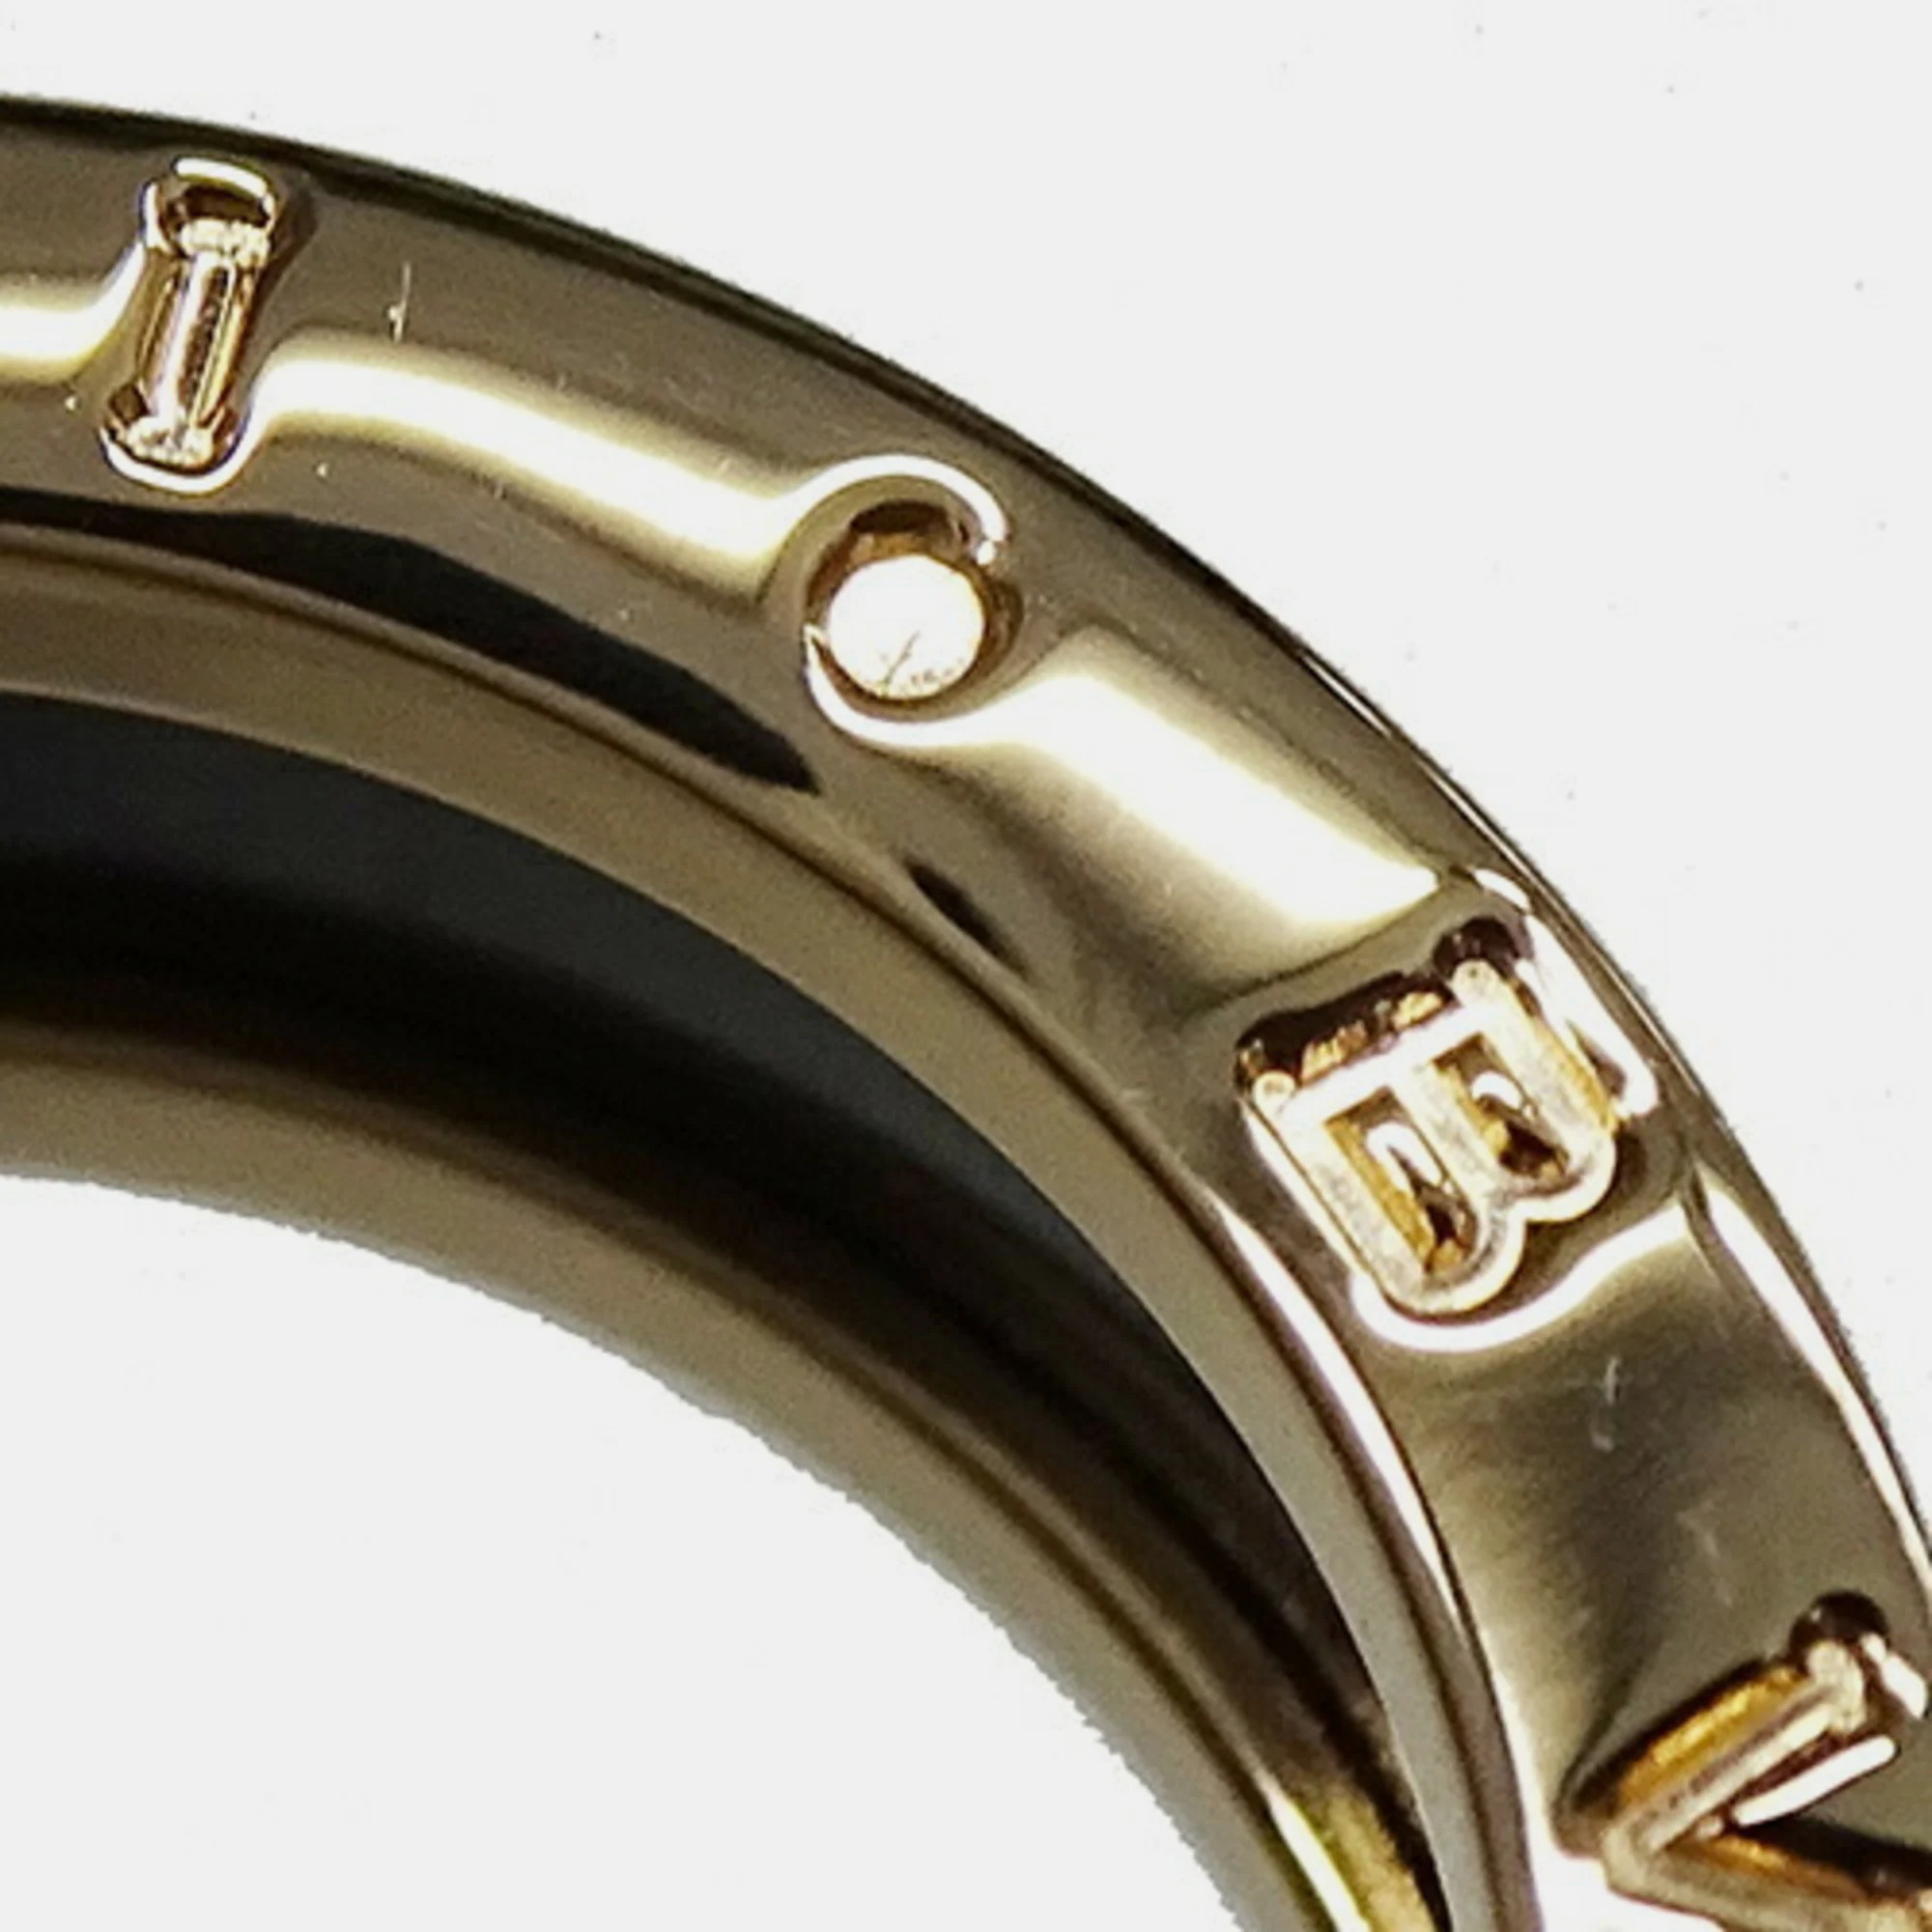 Bvlgari B.Zero1 18K Rose Gold Ceramic Ring EU 55